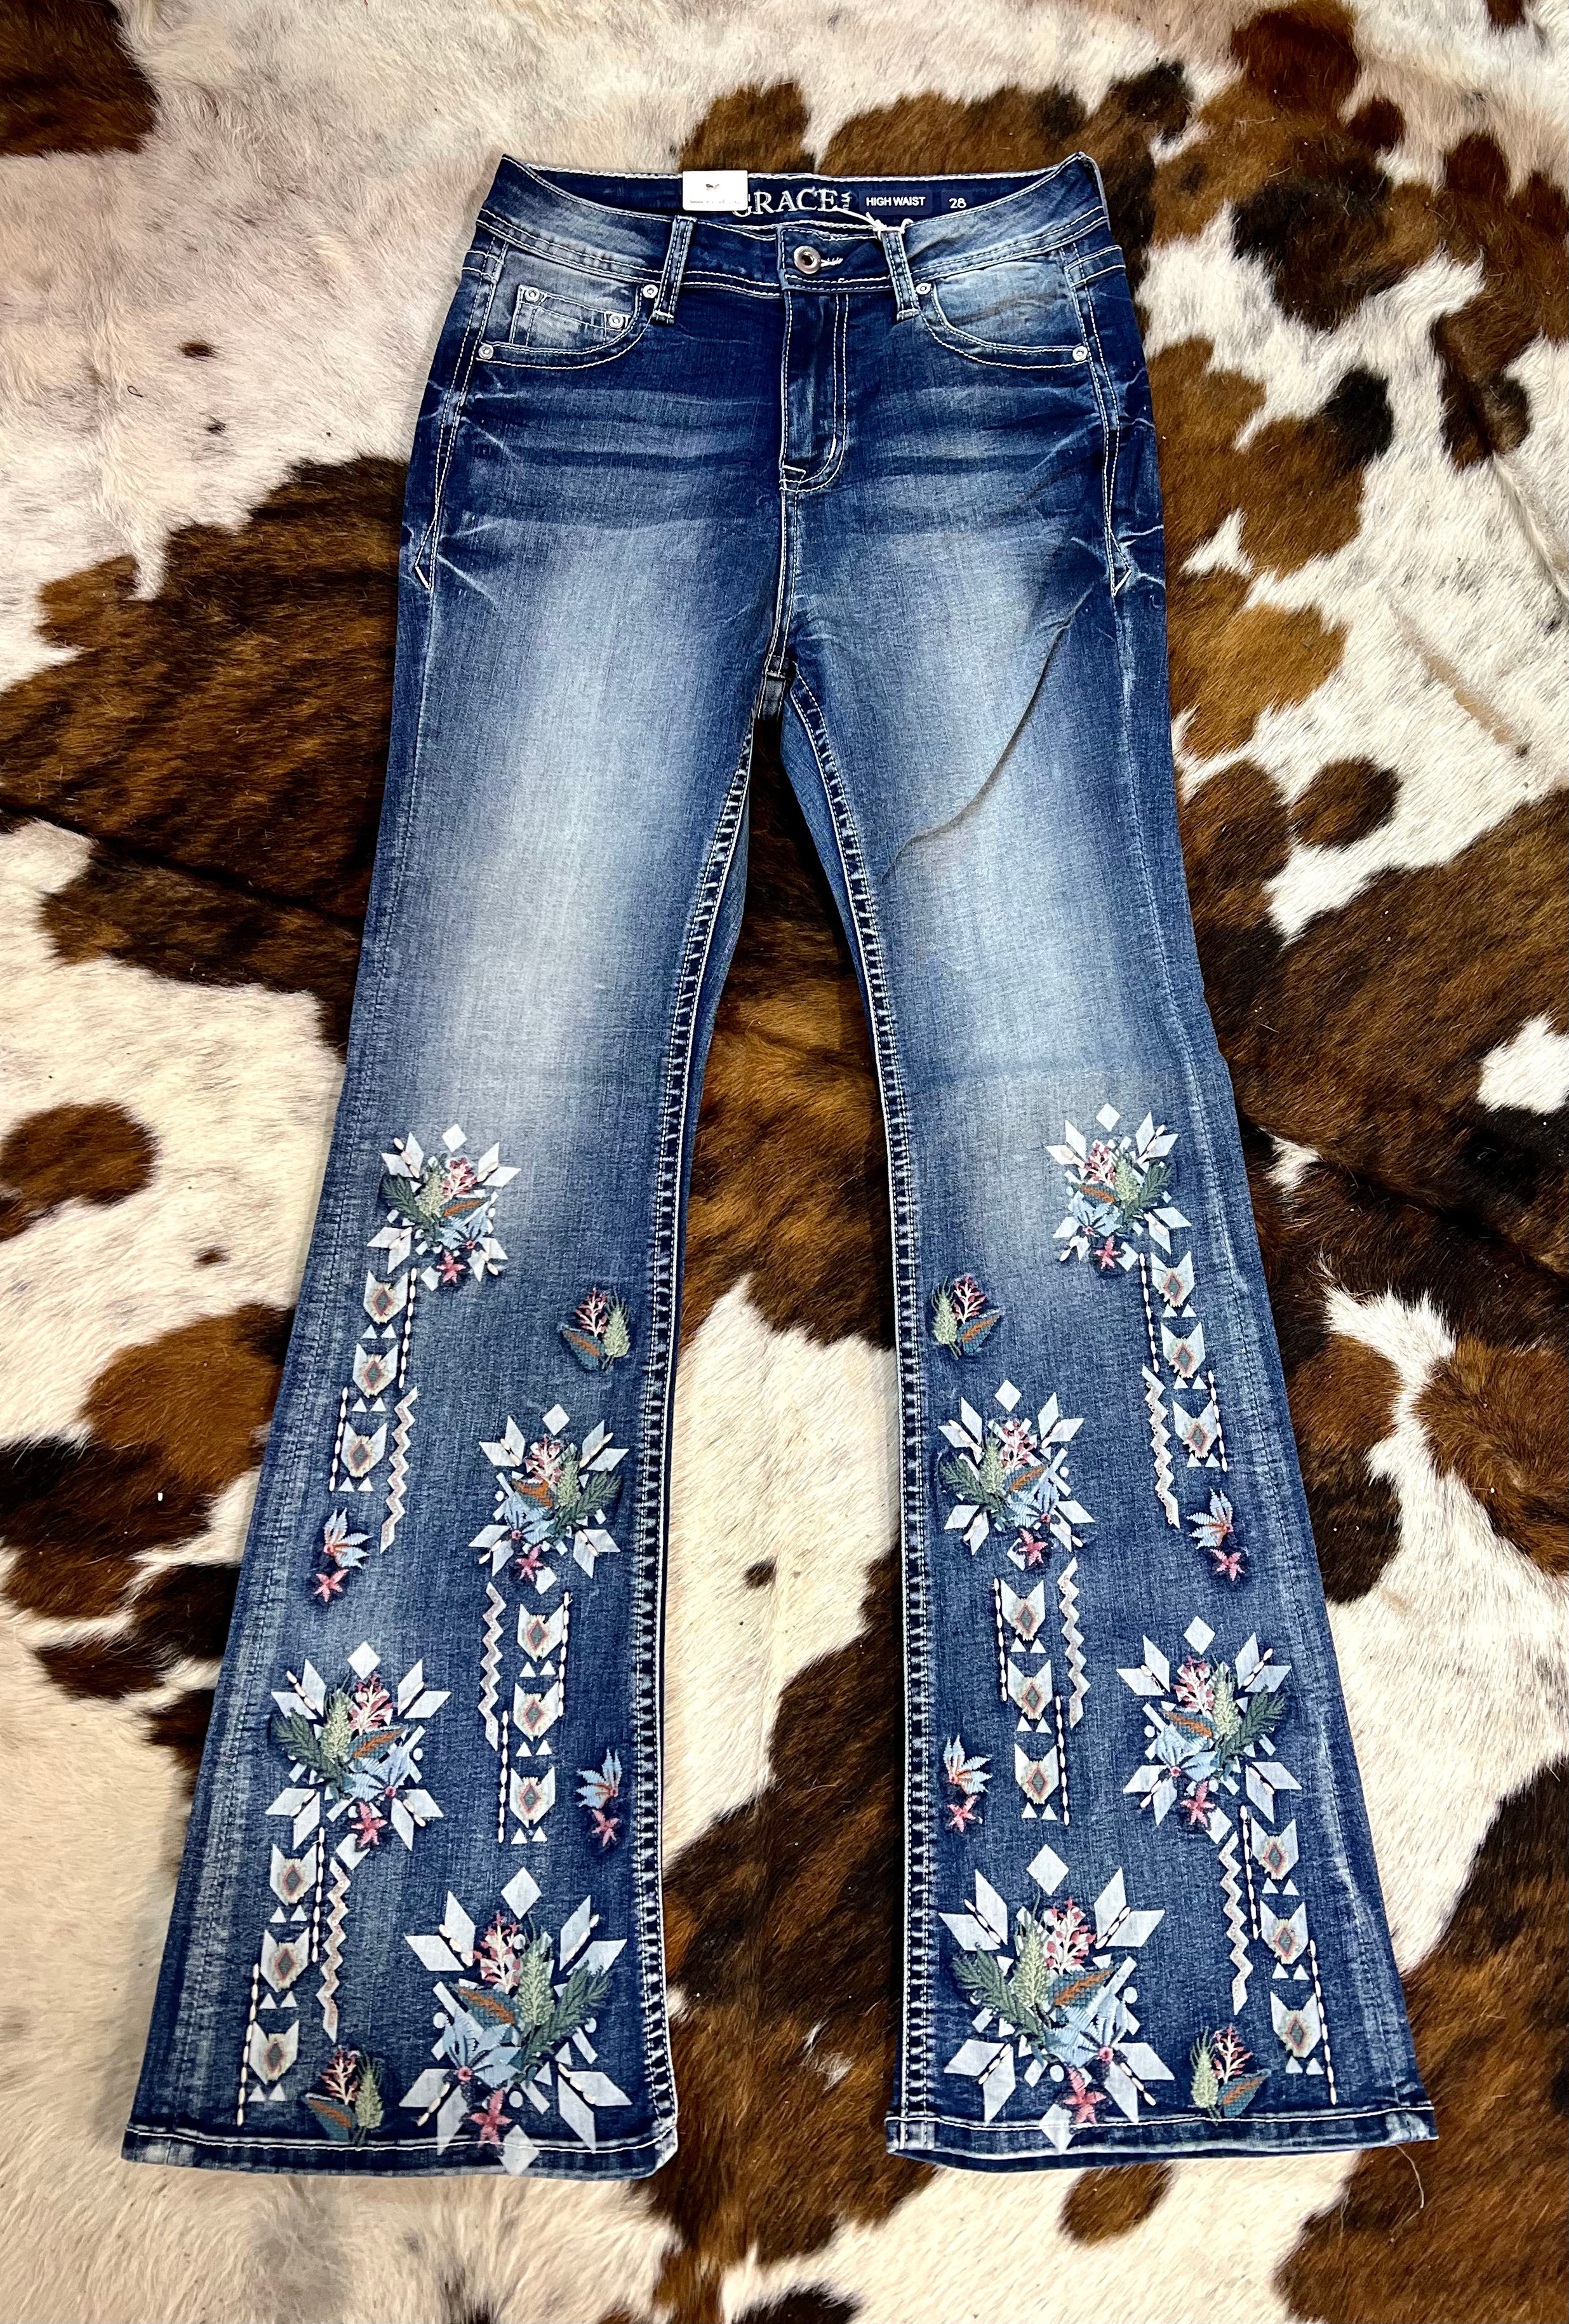 Rock & Roll Denim Girls Aztec Pocket Bootcut Jeans RRGD4MRZPW - Russell's  Western Wear, Inc.